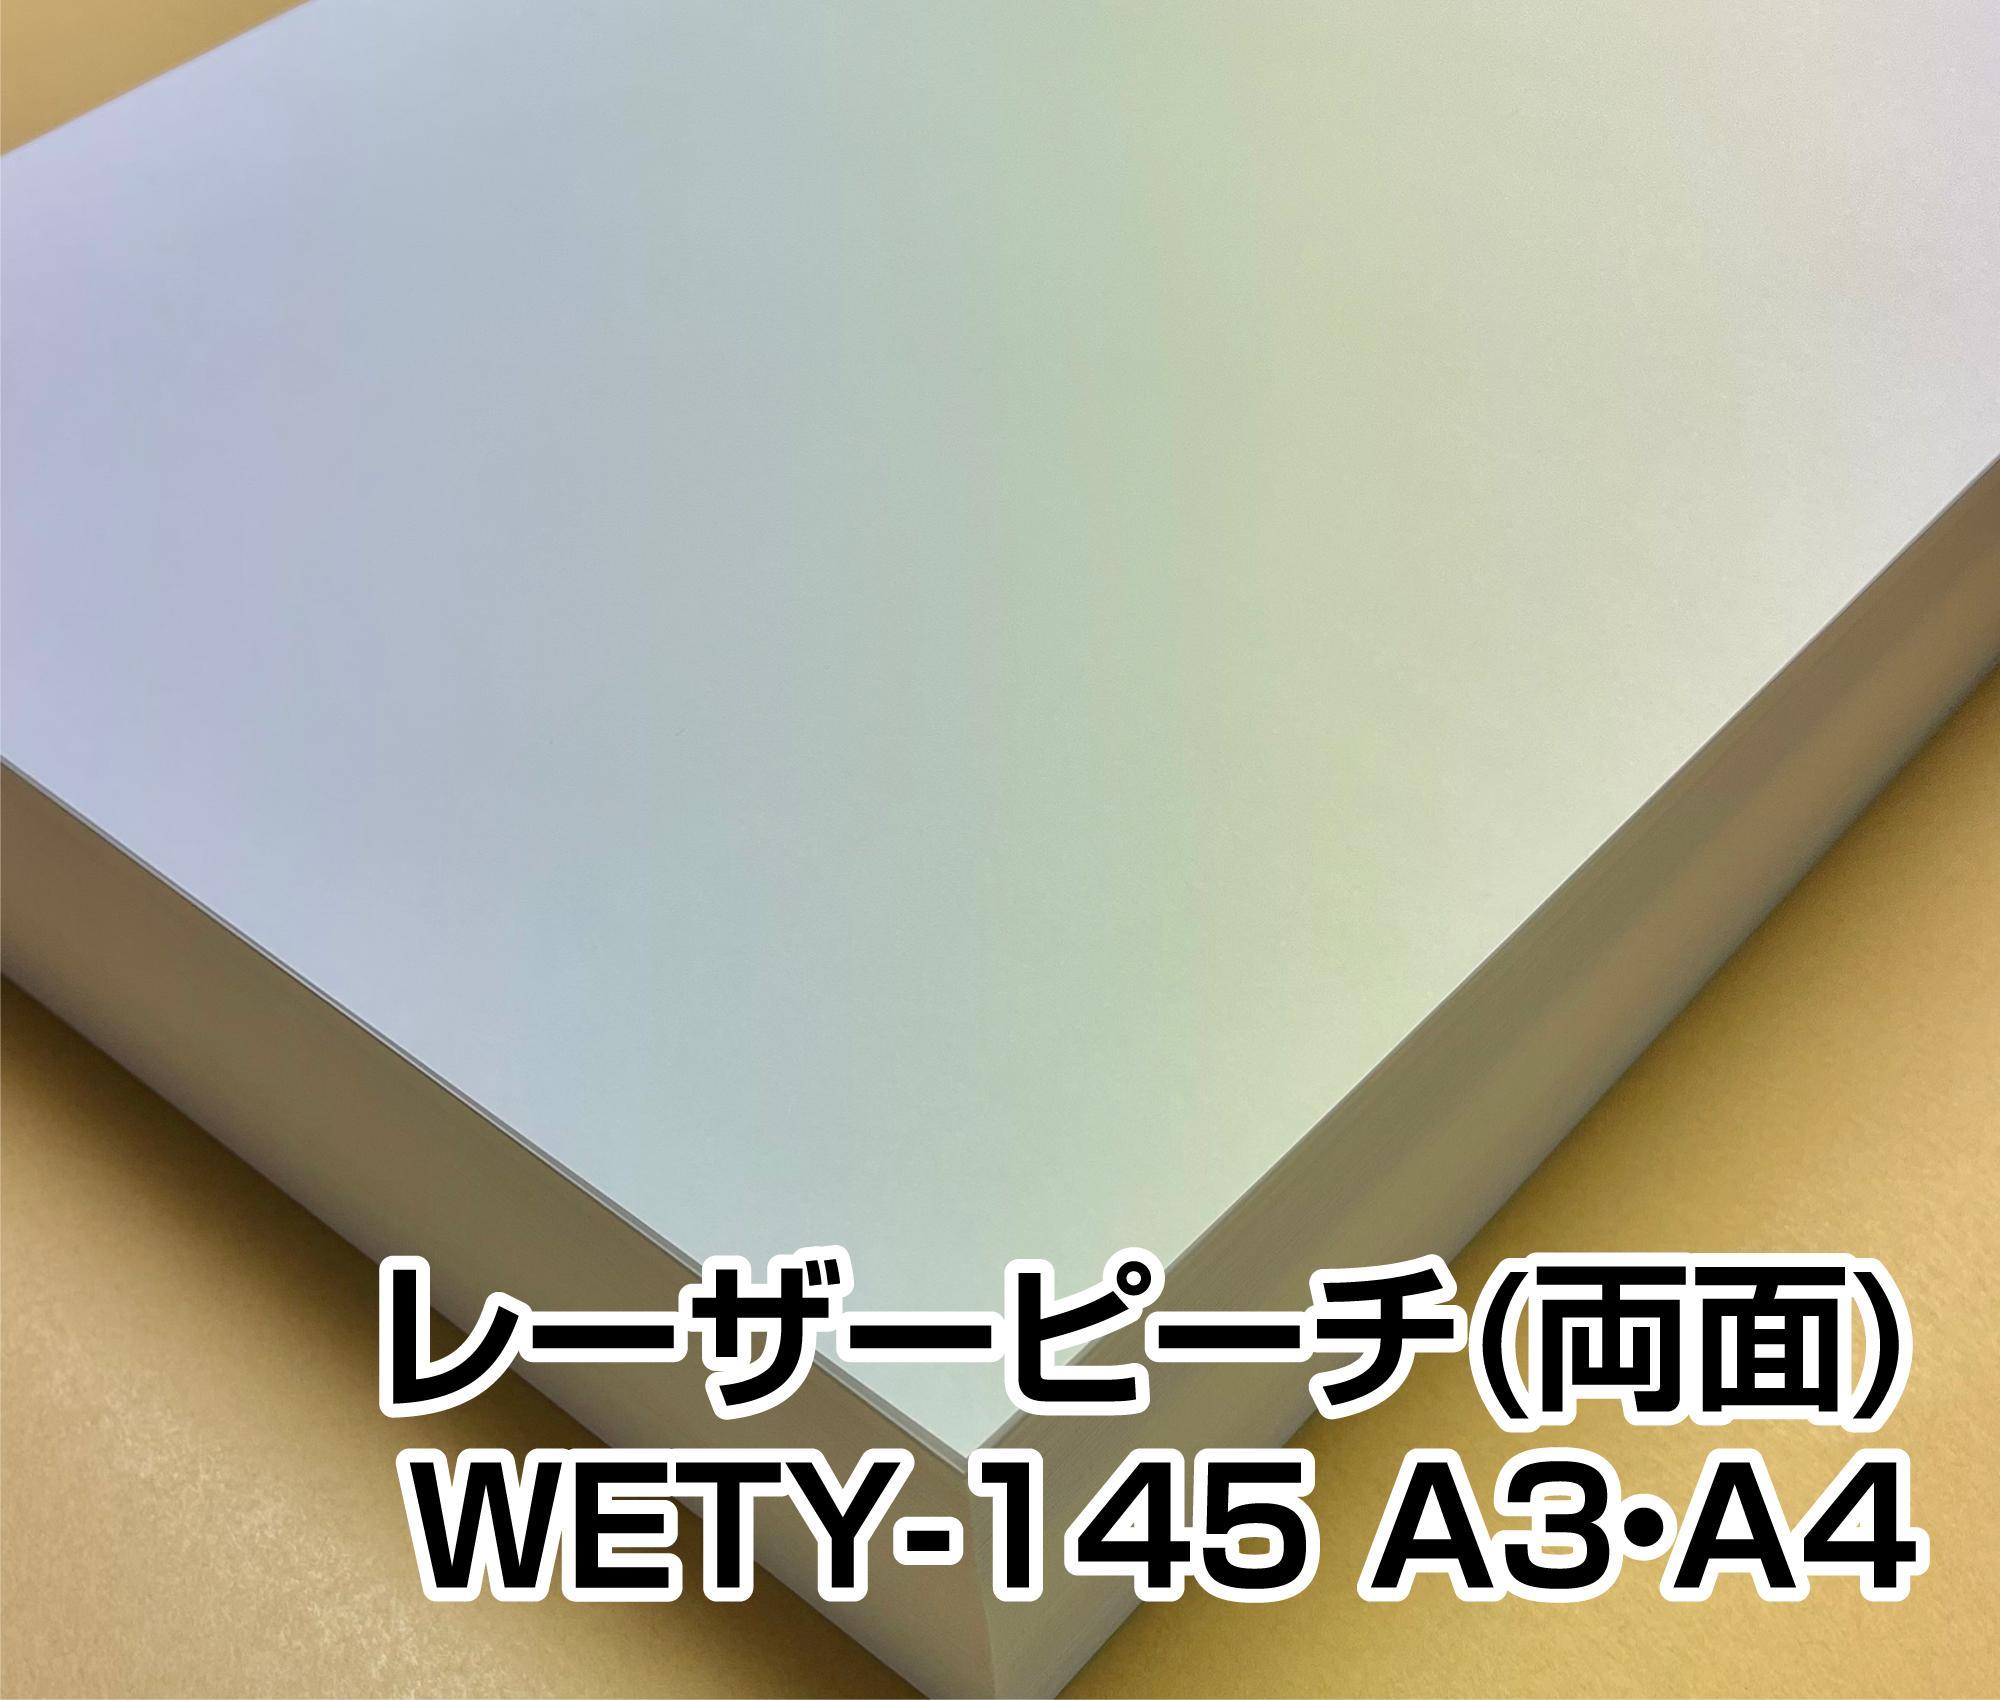 新登場 大王製紙 レーザーピーチ WETY-210 A3 100枚入 WETY210A3 3734958